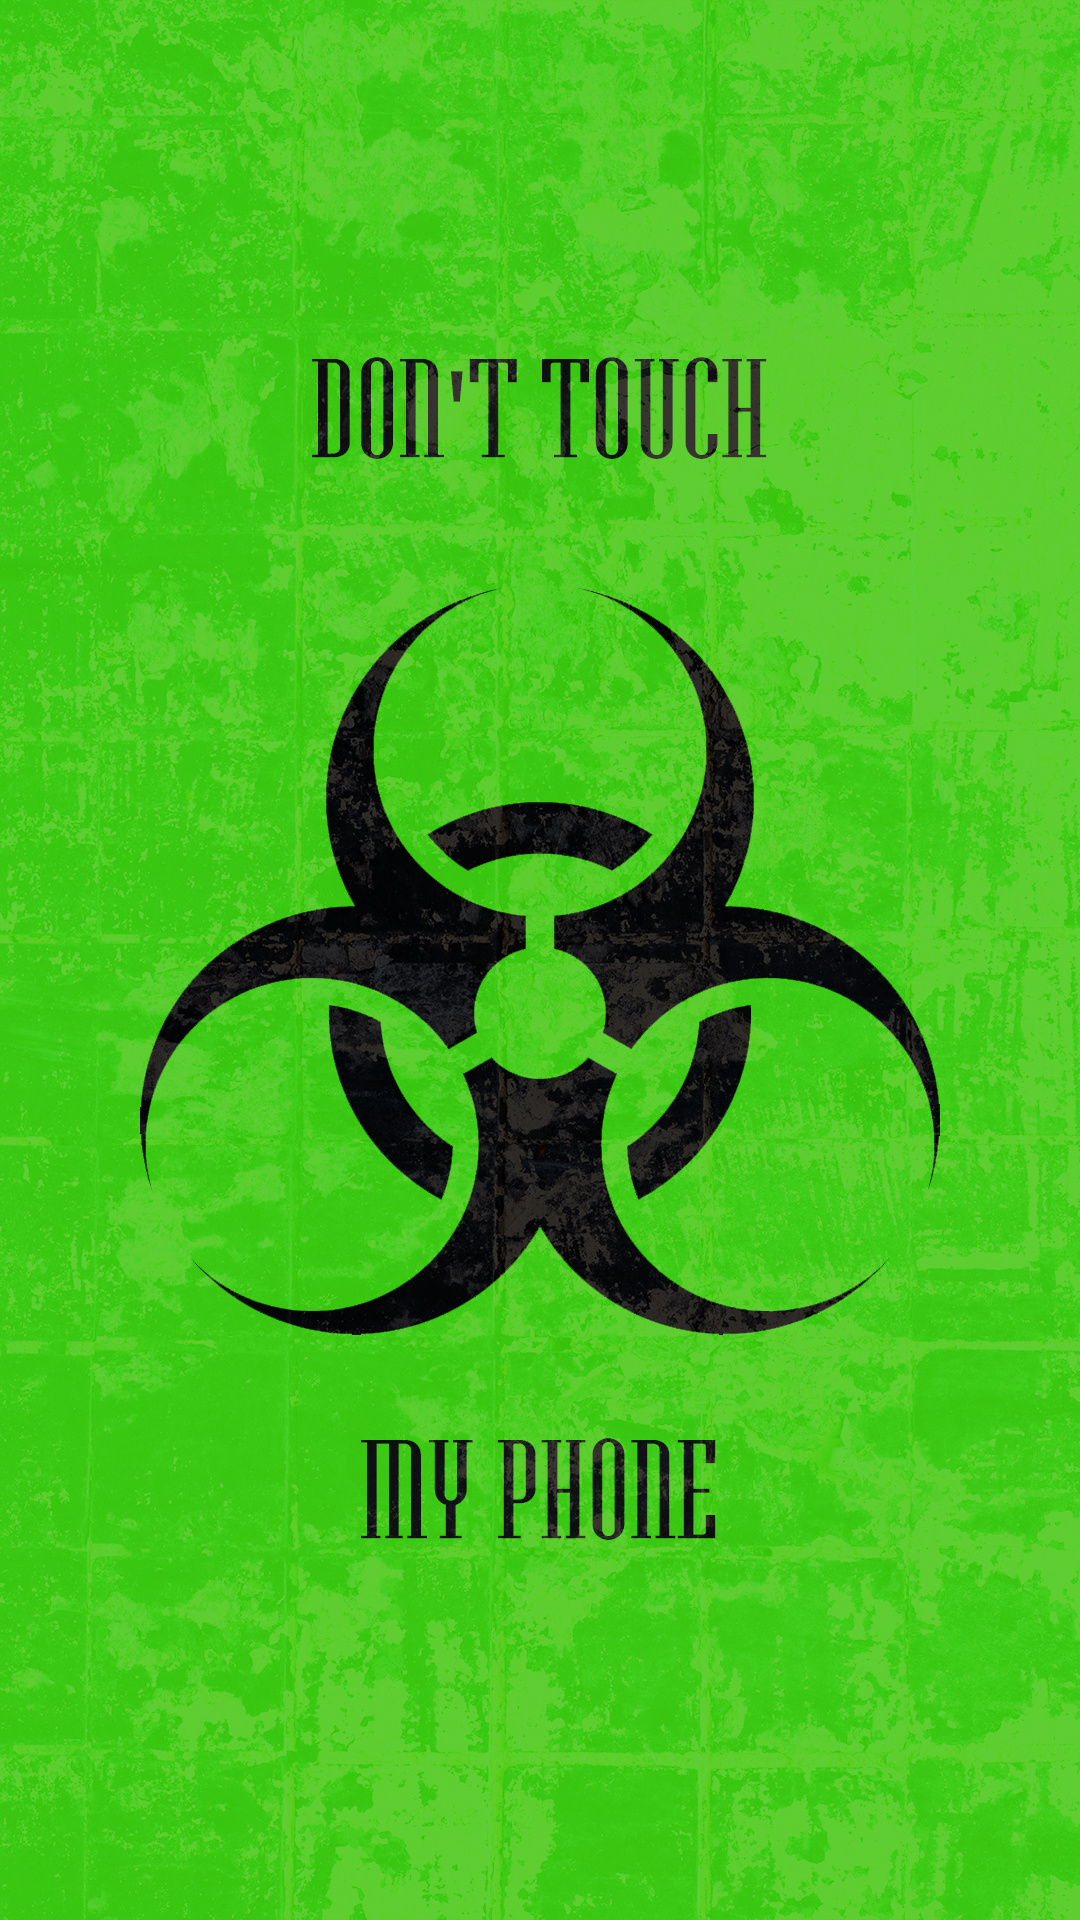 Green Biohazard: Don't touch my phone, Hazardous environment warning. 1080x1920 Full HD Background.